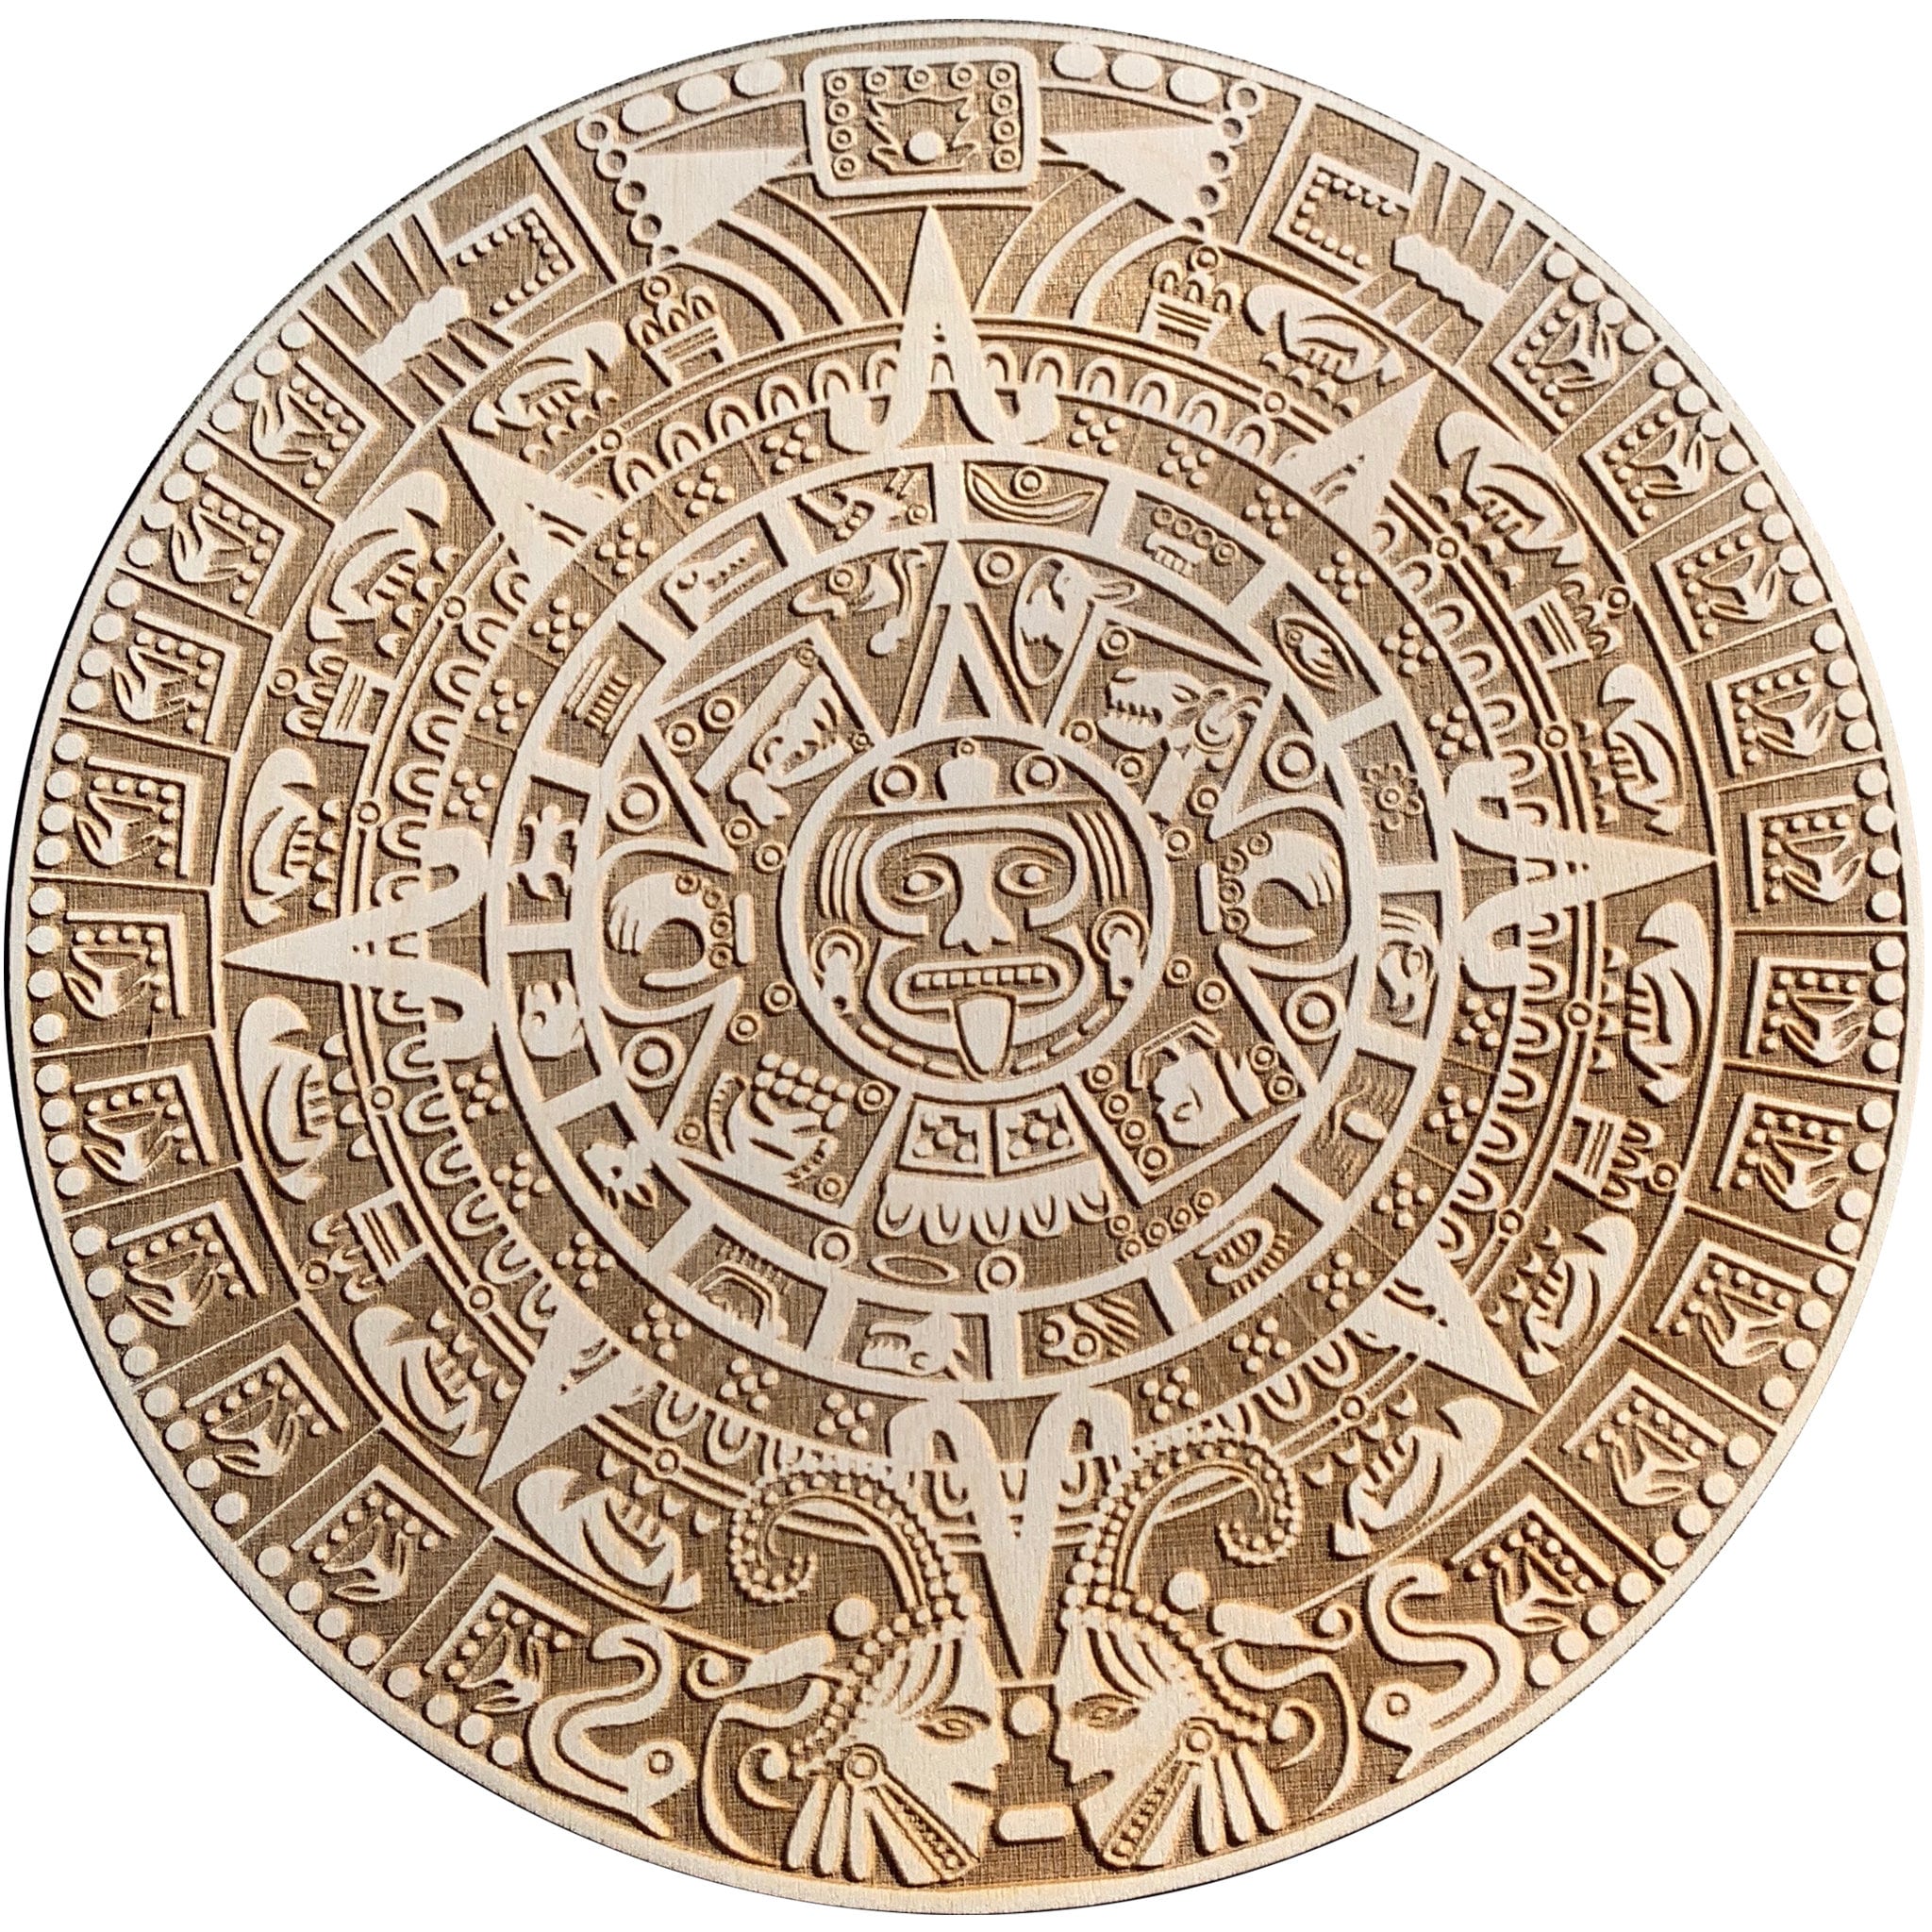 Aztec Calendar Laser Engraved On Baltic Birch Wood. Amazingly | Etsy